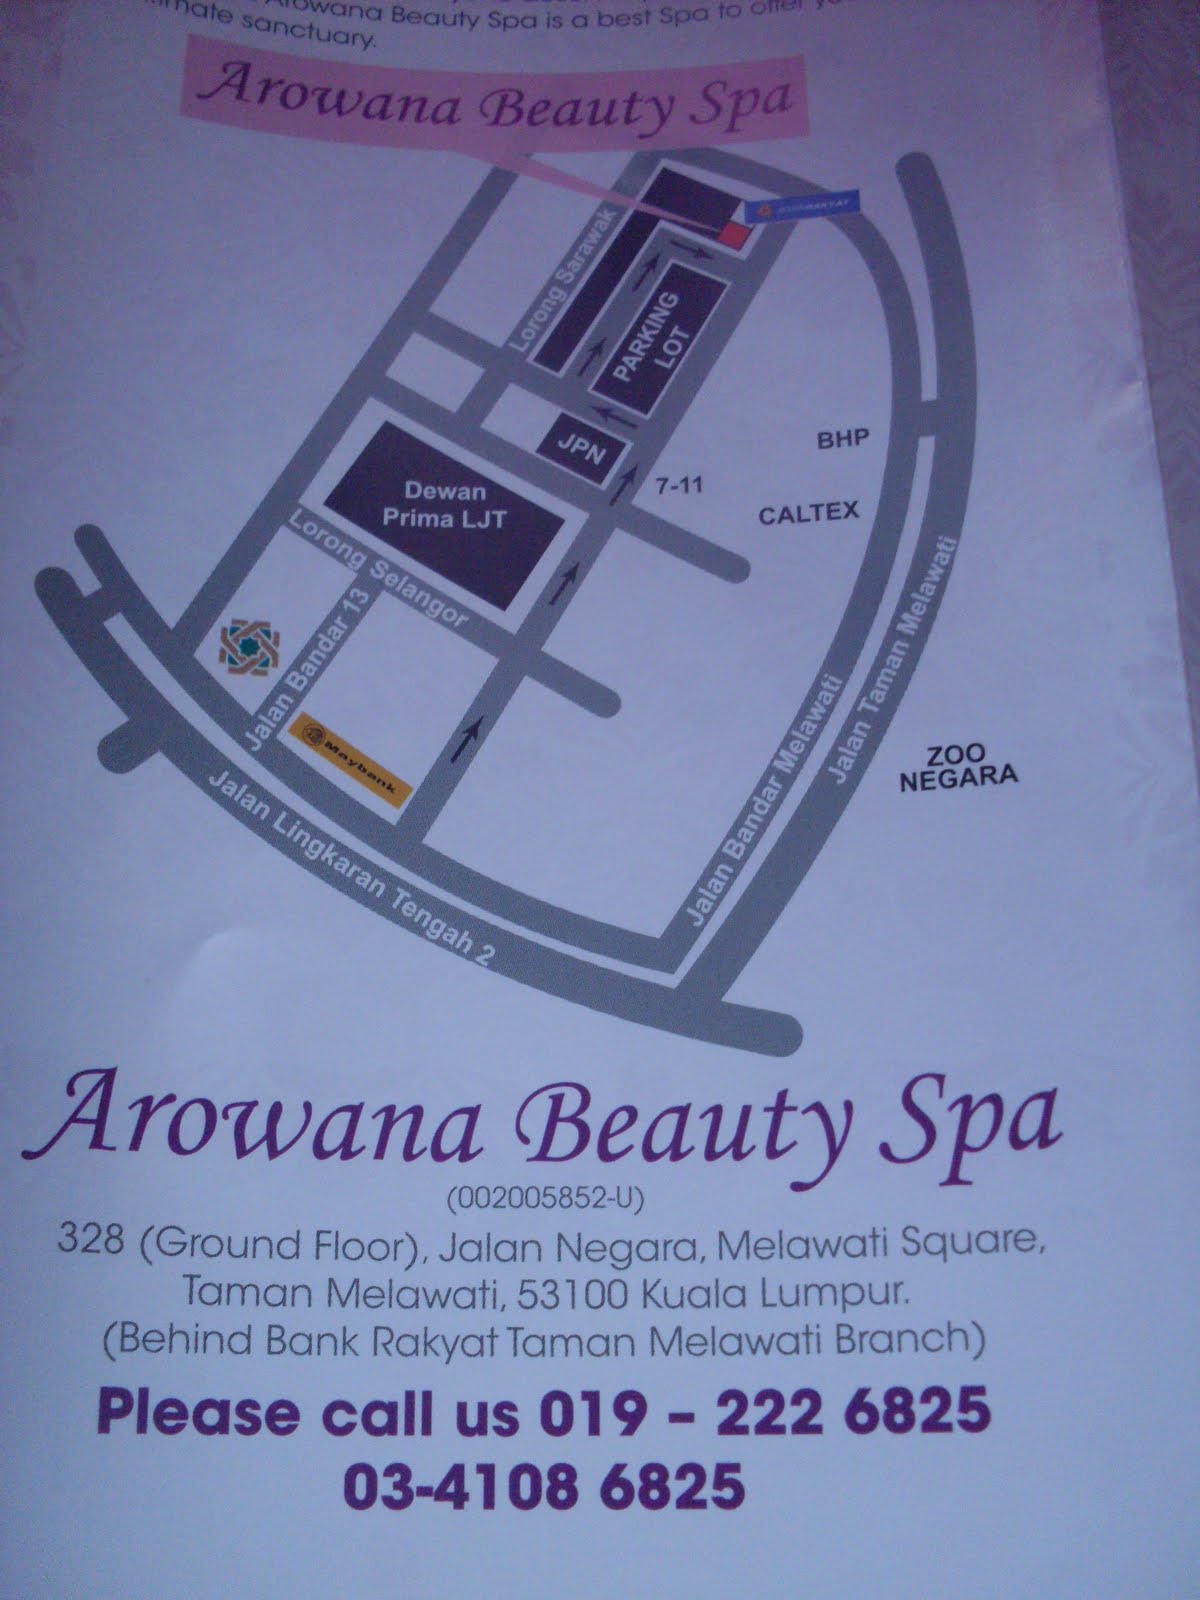 Sue S Sanctuary Arowana Beauty Spa Taman Melawati Kuala Lumpur Review From Voucher Purchased From Mydeal Com My